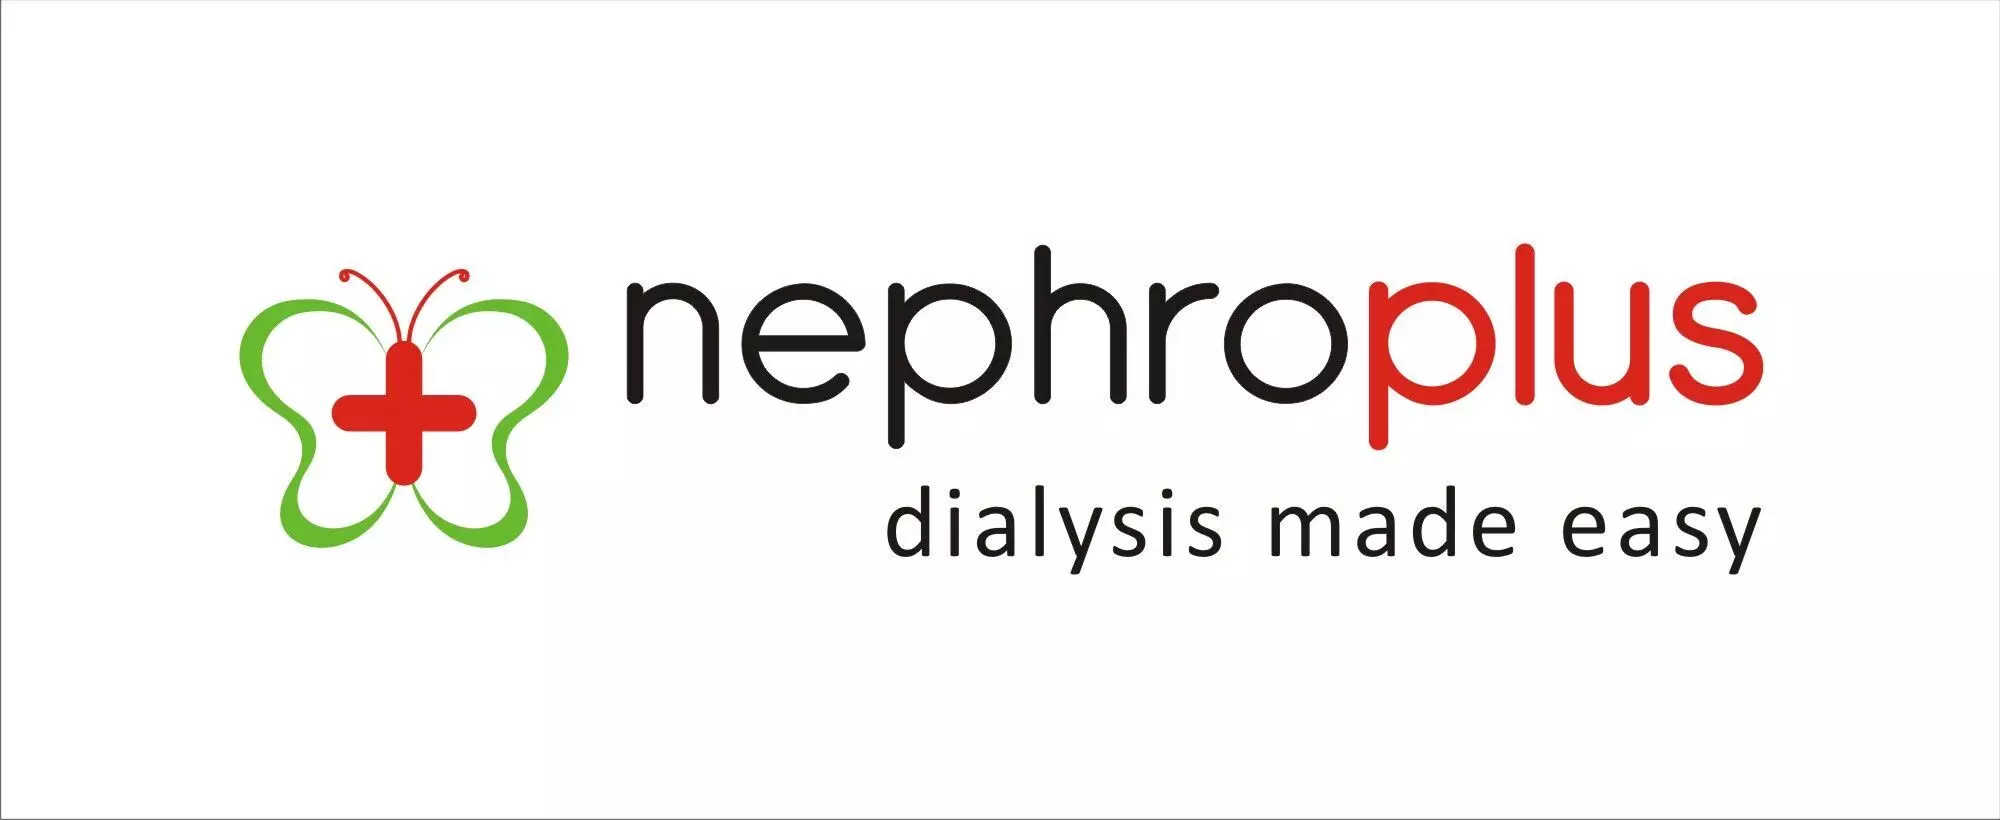 NephroPlus to train 200 young technicians through Enpidia